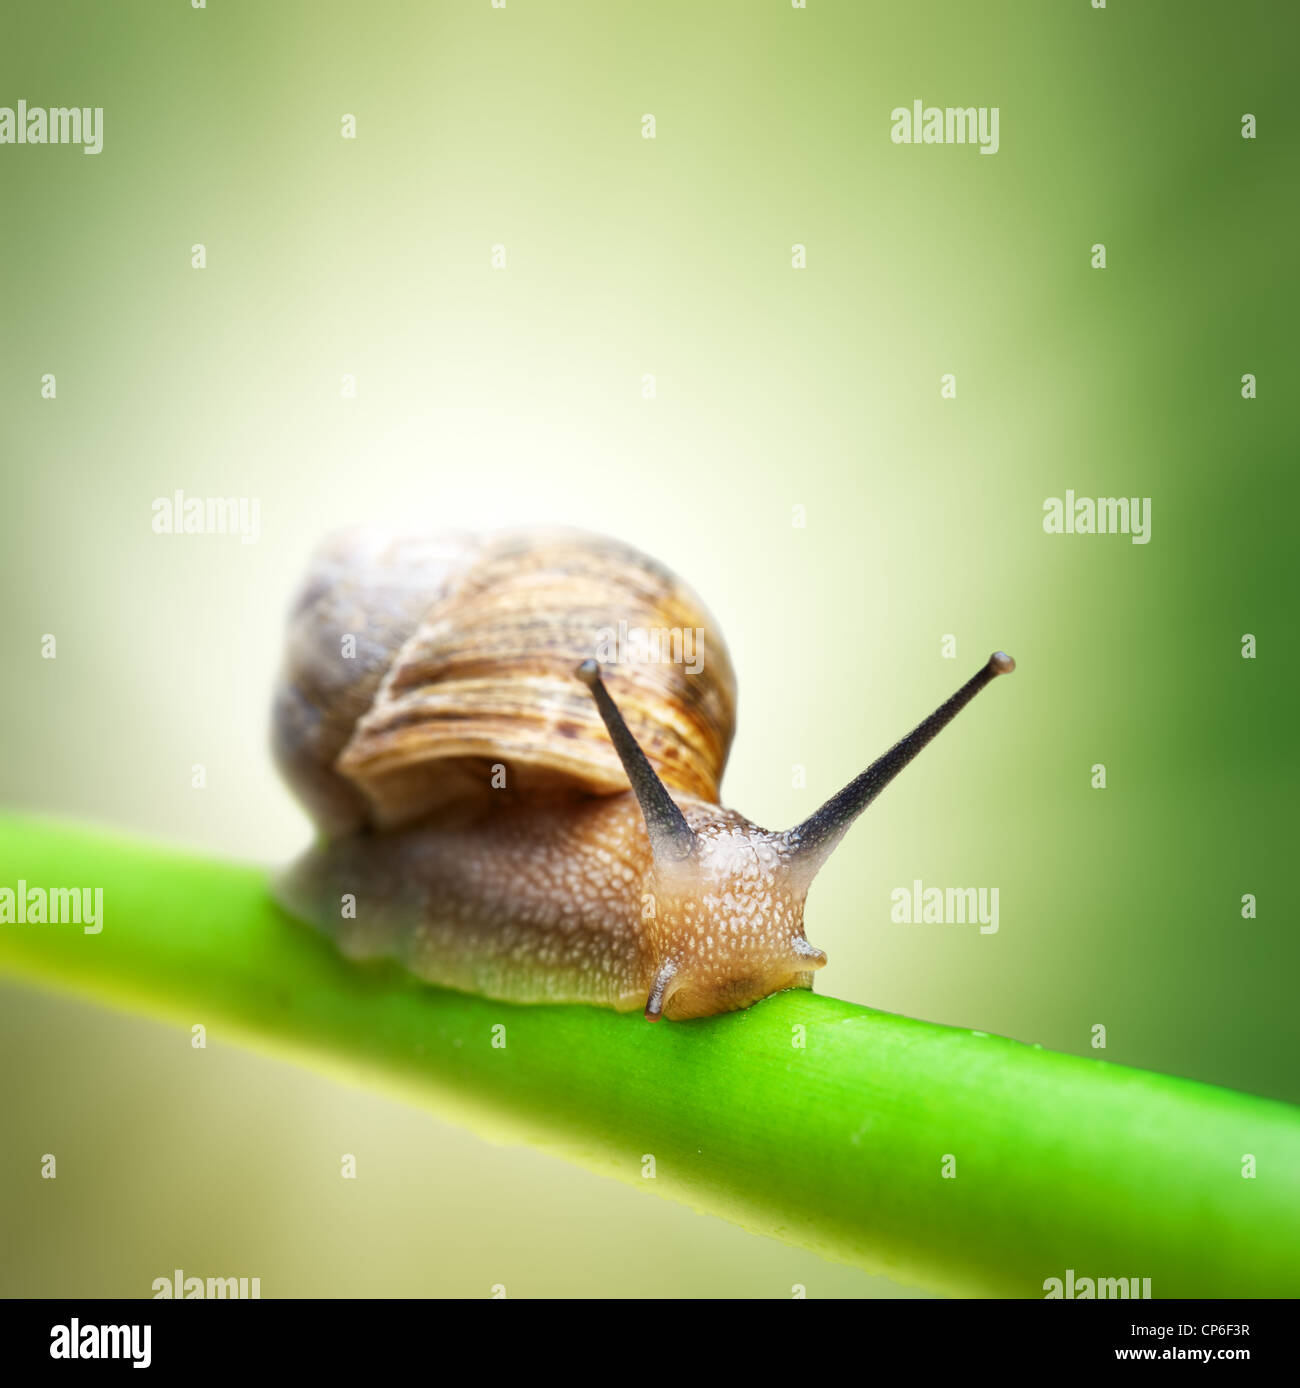 Snail crawling on green stem Stock Photo